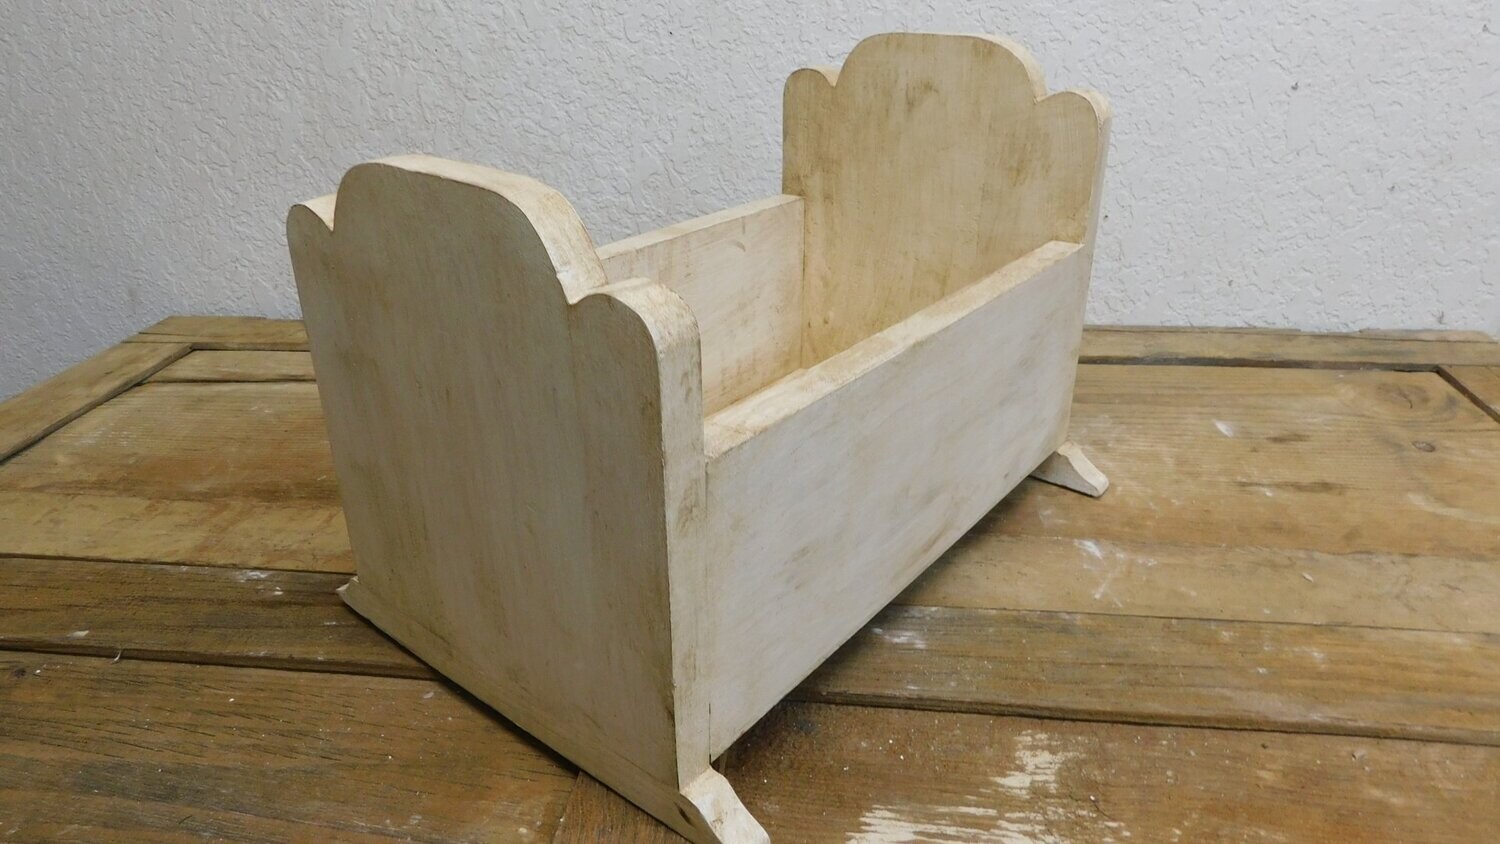 Dainty Bed-Newborn Prop-Handmade-Wood-16x11x11H in-CLEARANCE